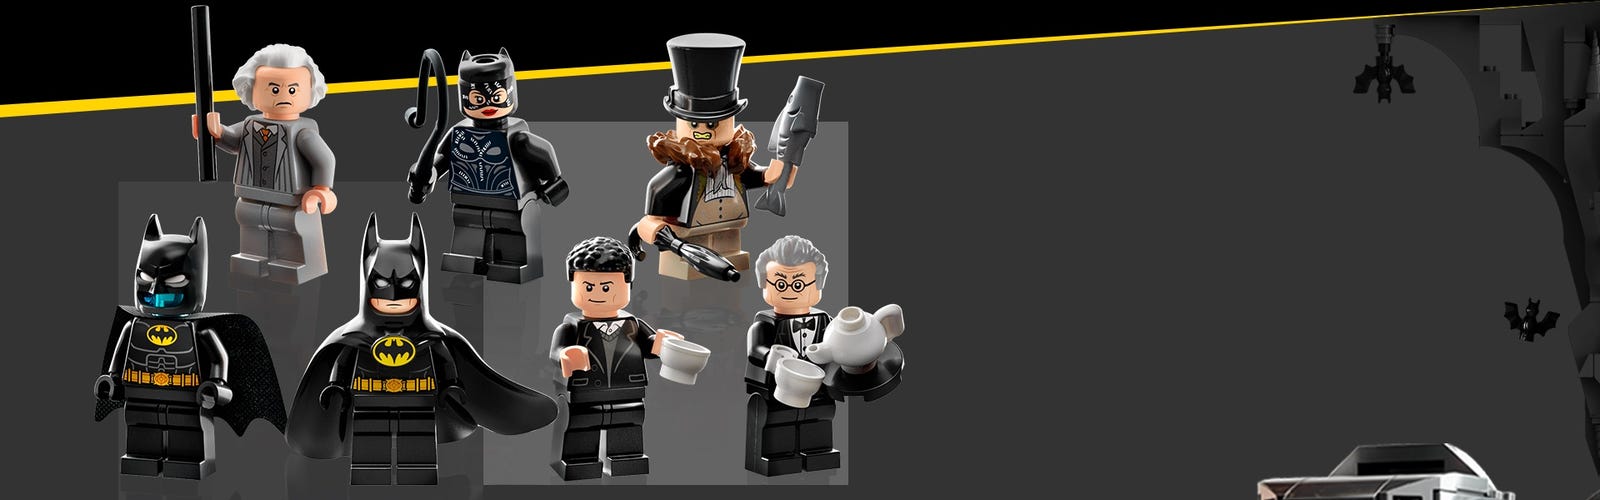 Official Look at the LEGO Batman Returns Batcave Shadow Box - Brick  Magazine